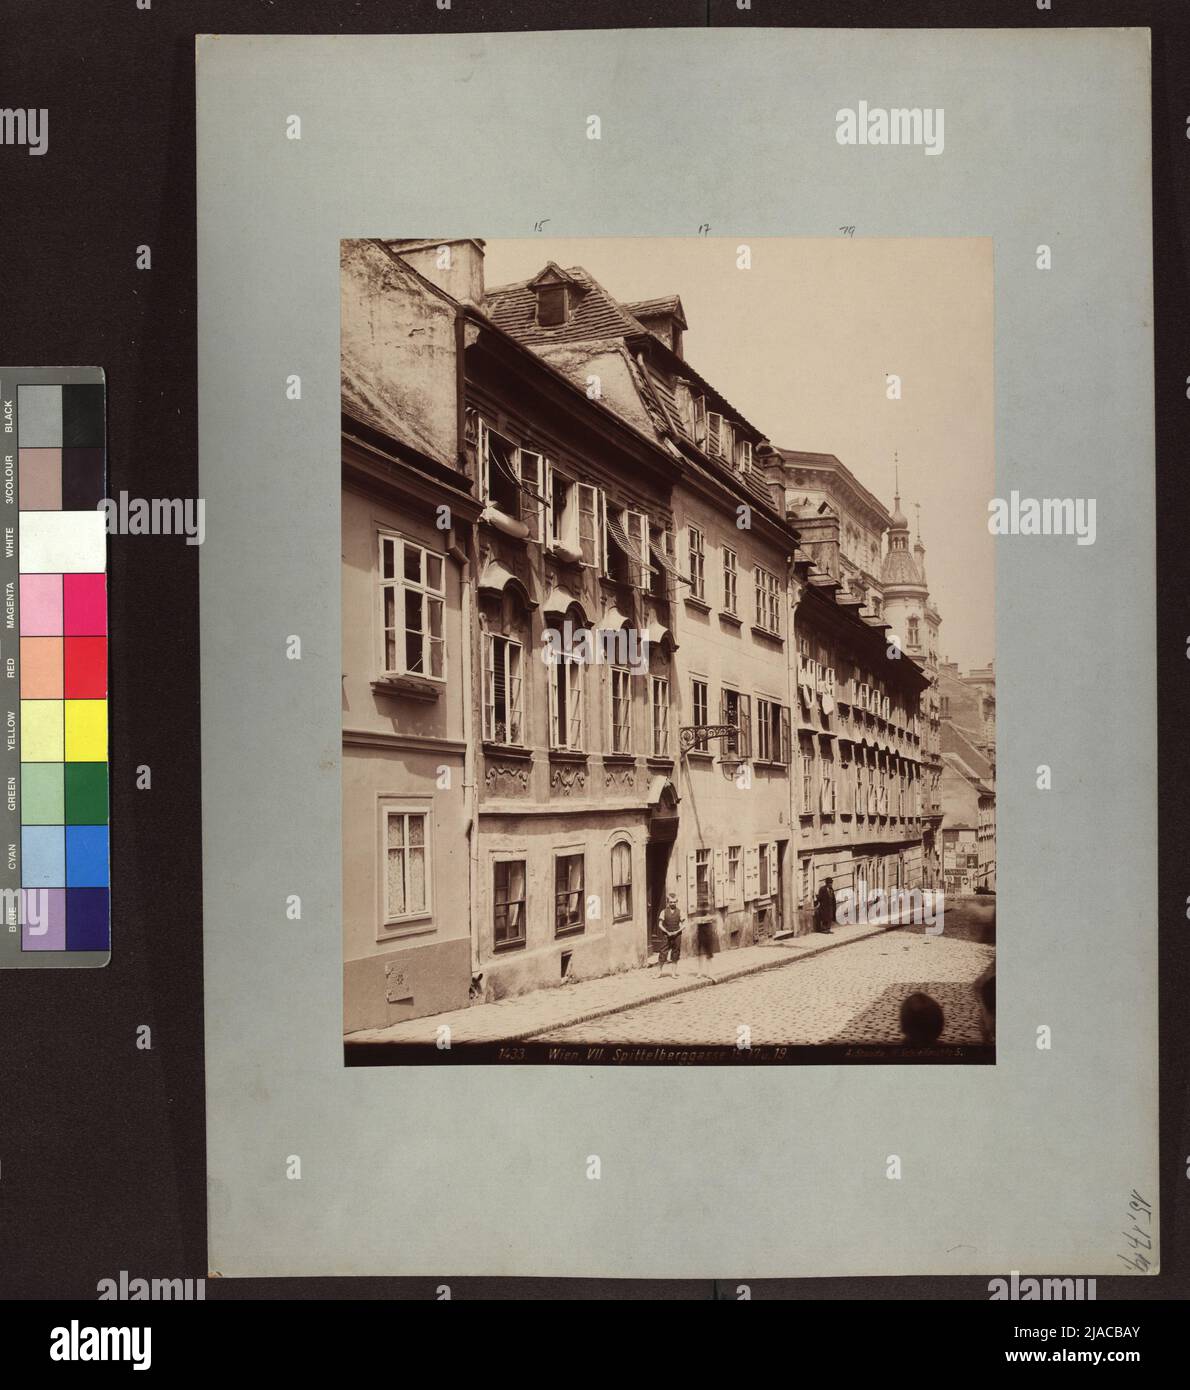 7th, Spittelberggasse 15-19 - View towards Burggasse. August Stauda (1861-1928), photographer Stock Photo